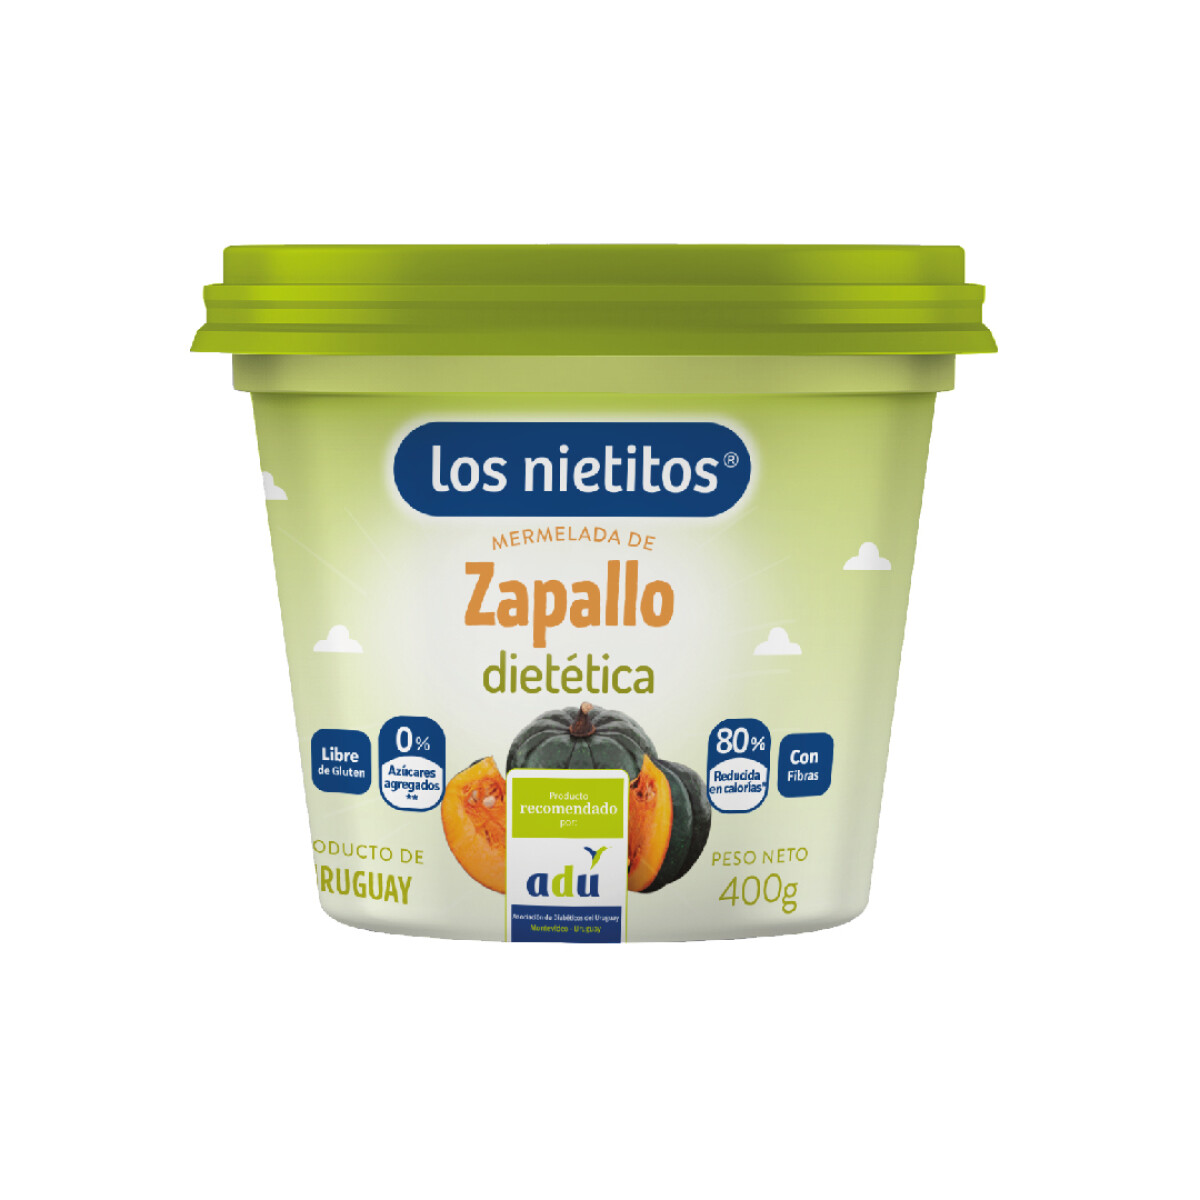 Mermelada De Zapallo Dietetica Los Nietitos 400g 